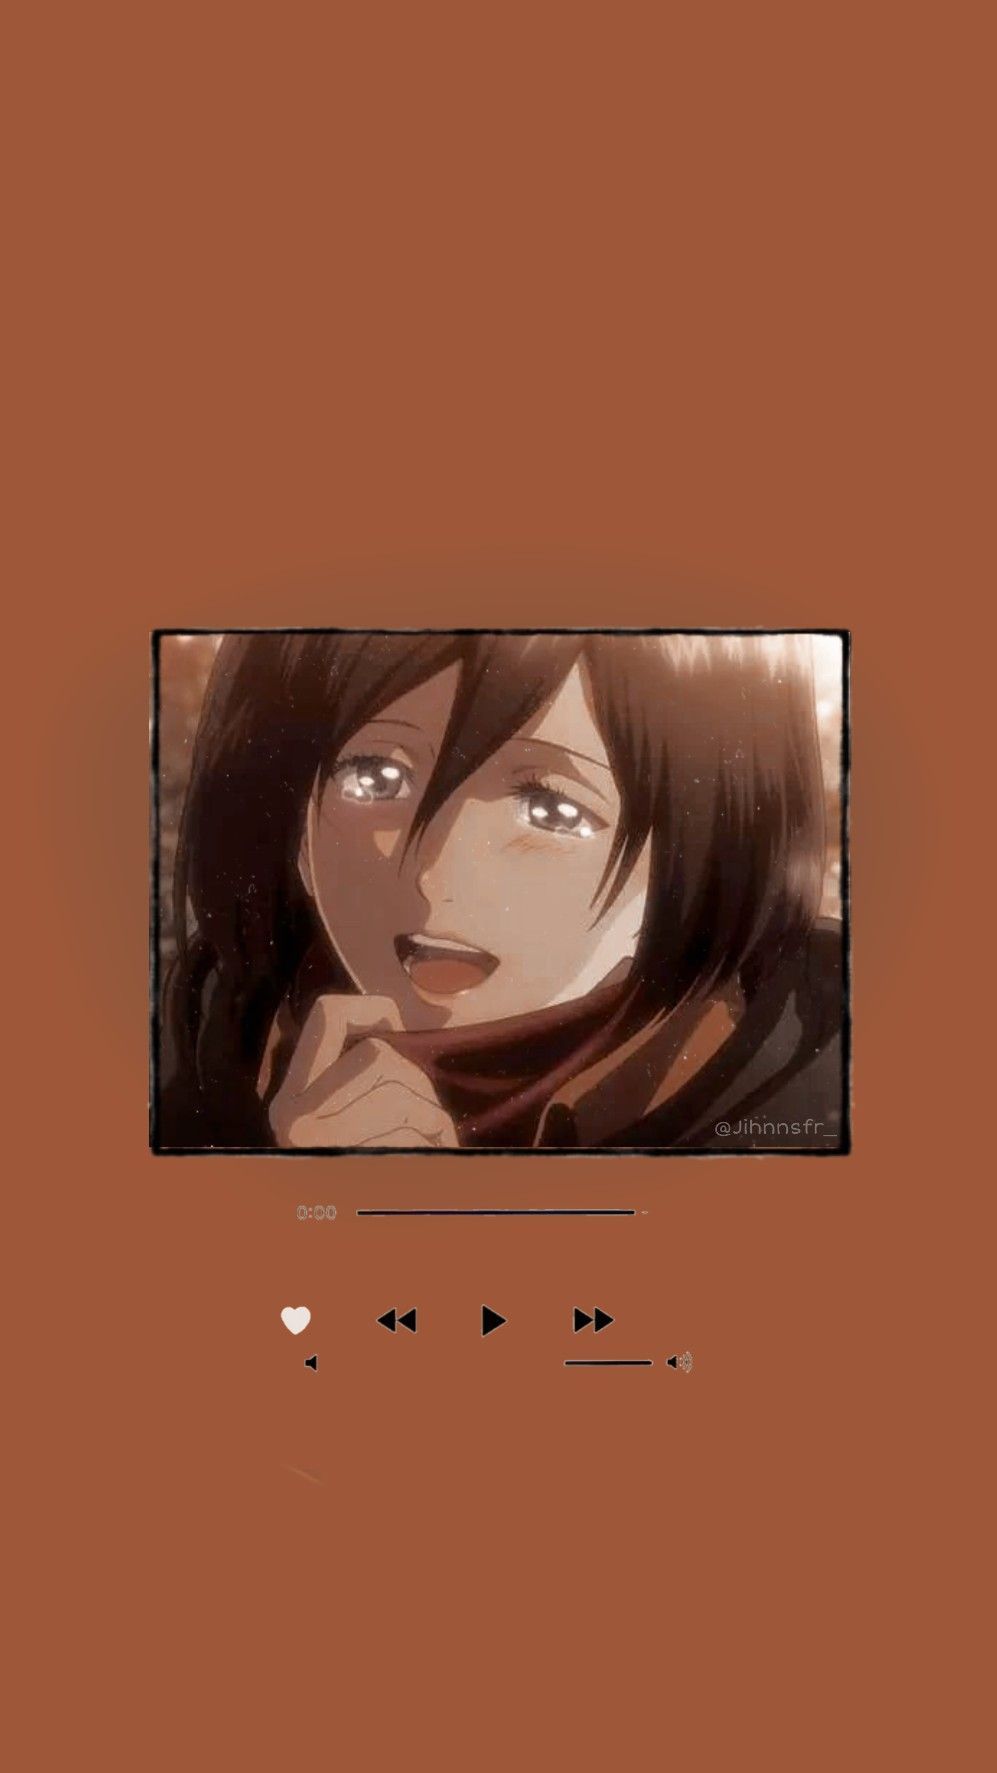 Mikasa Ackerman. Anime wallpaper, Anime background, Cute anime wallpaper